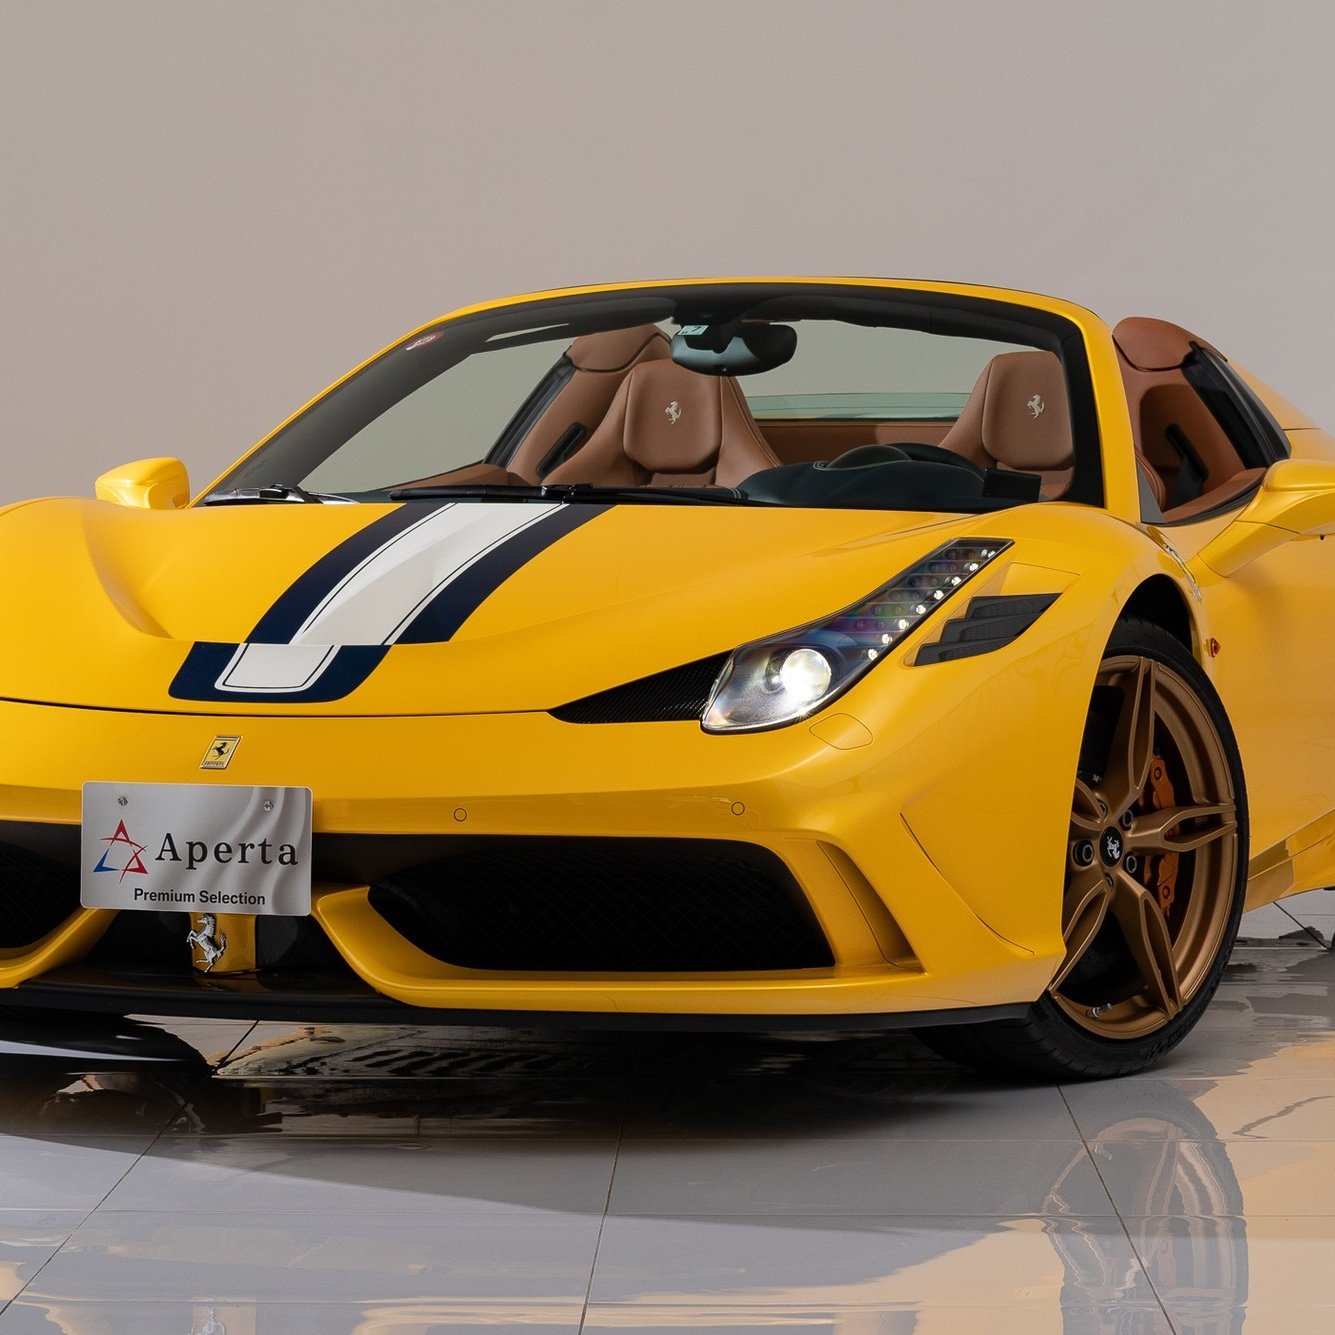 The most expensive Ferrari cars in 2021: 2015 Ferrari 458 Speciale Aperta rwd, approx. US$786,399. 